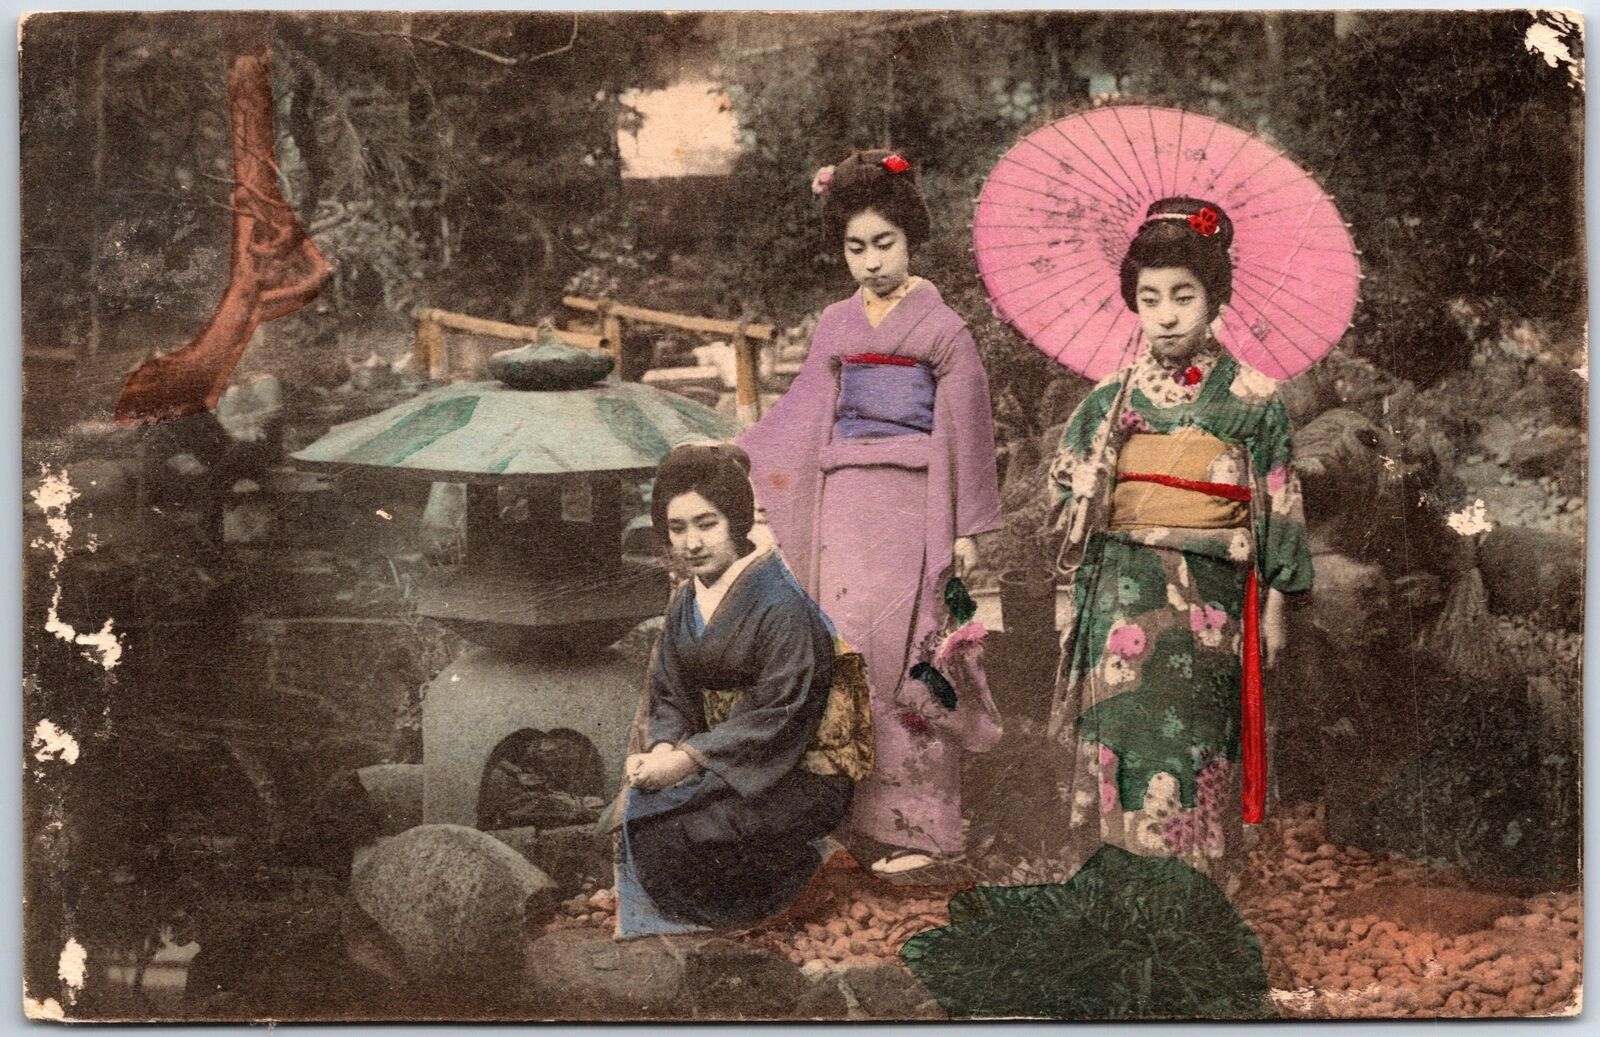 VINTAGE POSTCARD GEISHA GIRLS SCENE IN JAPAN MAILED TO NEW YORK USA c. 1910s